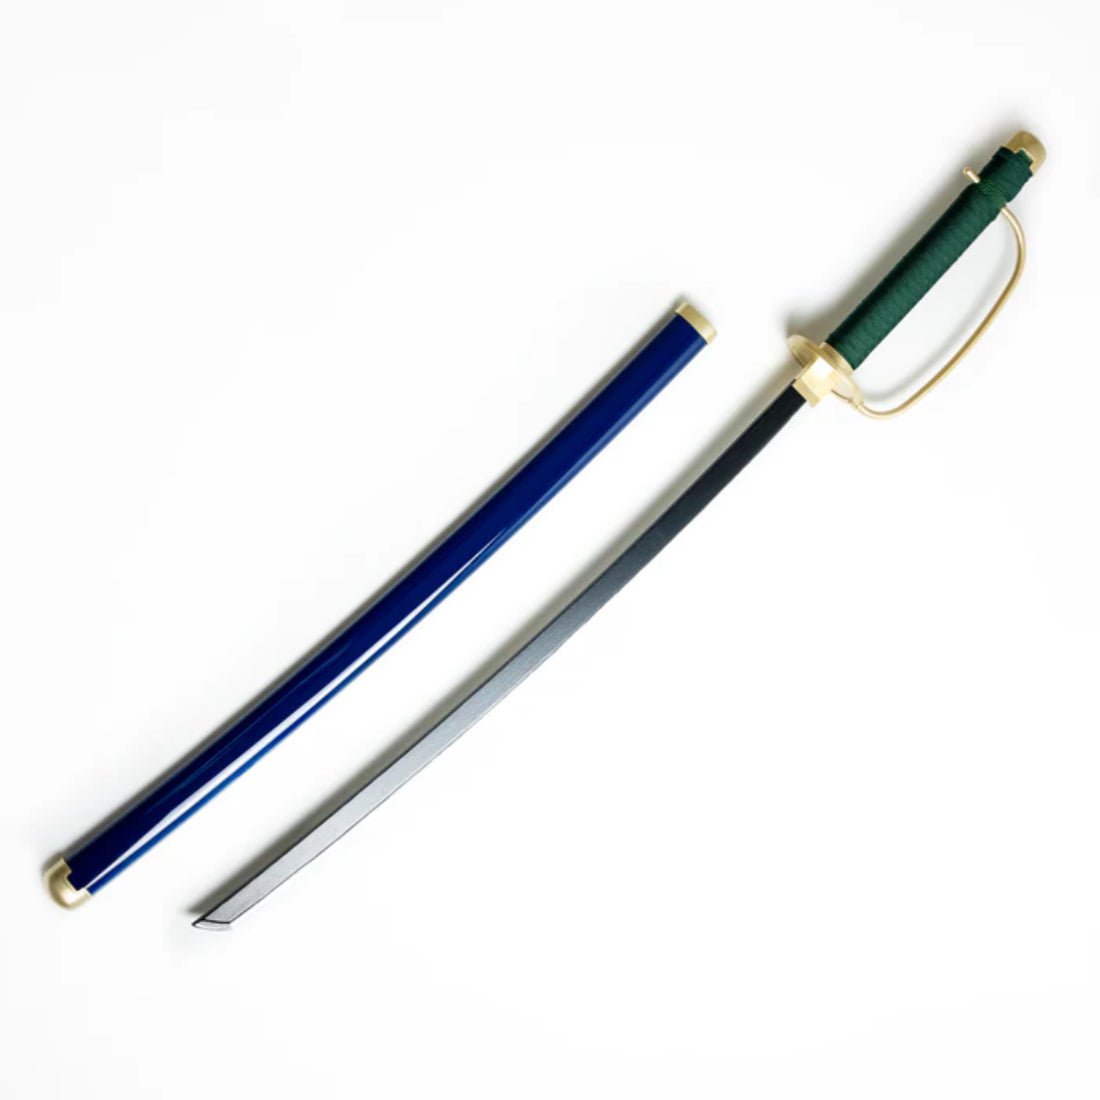 Shanks Gryphon Saber Sword - Green & Blue - اكسسوارات - Store 974 | ستور ٩٧٤